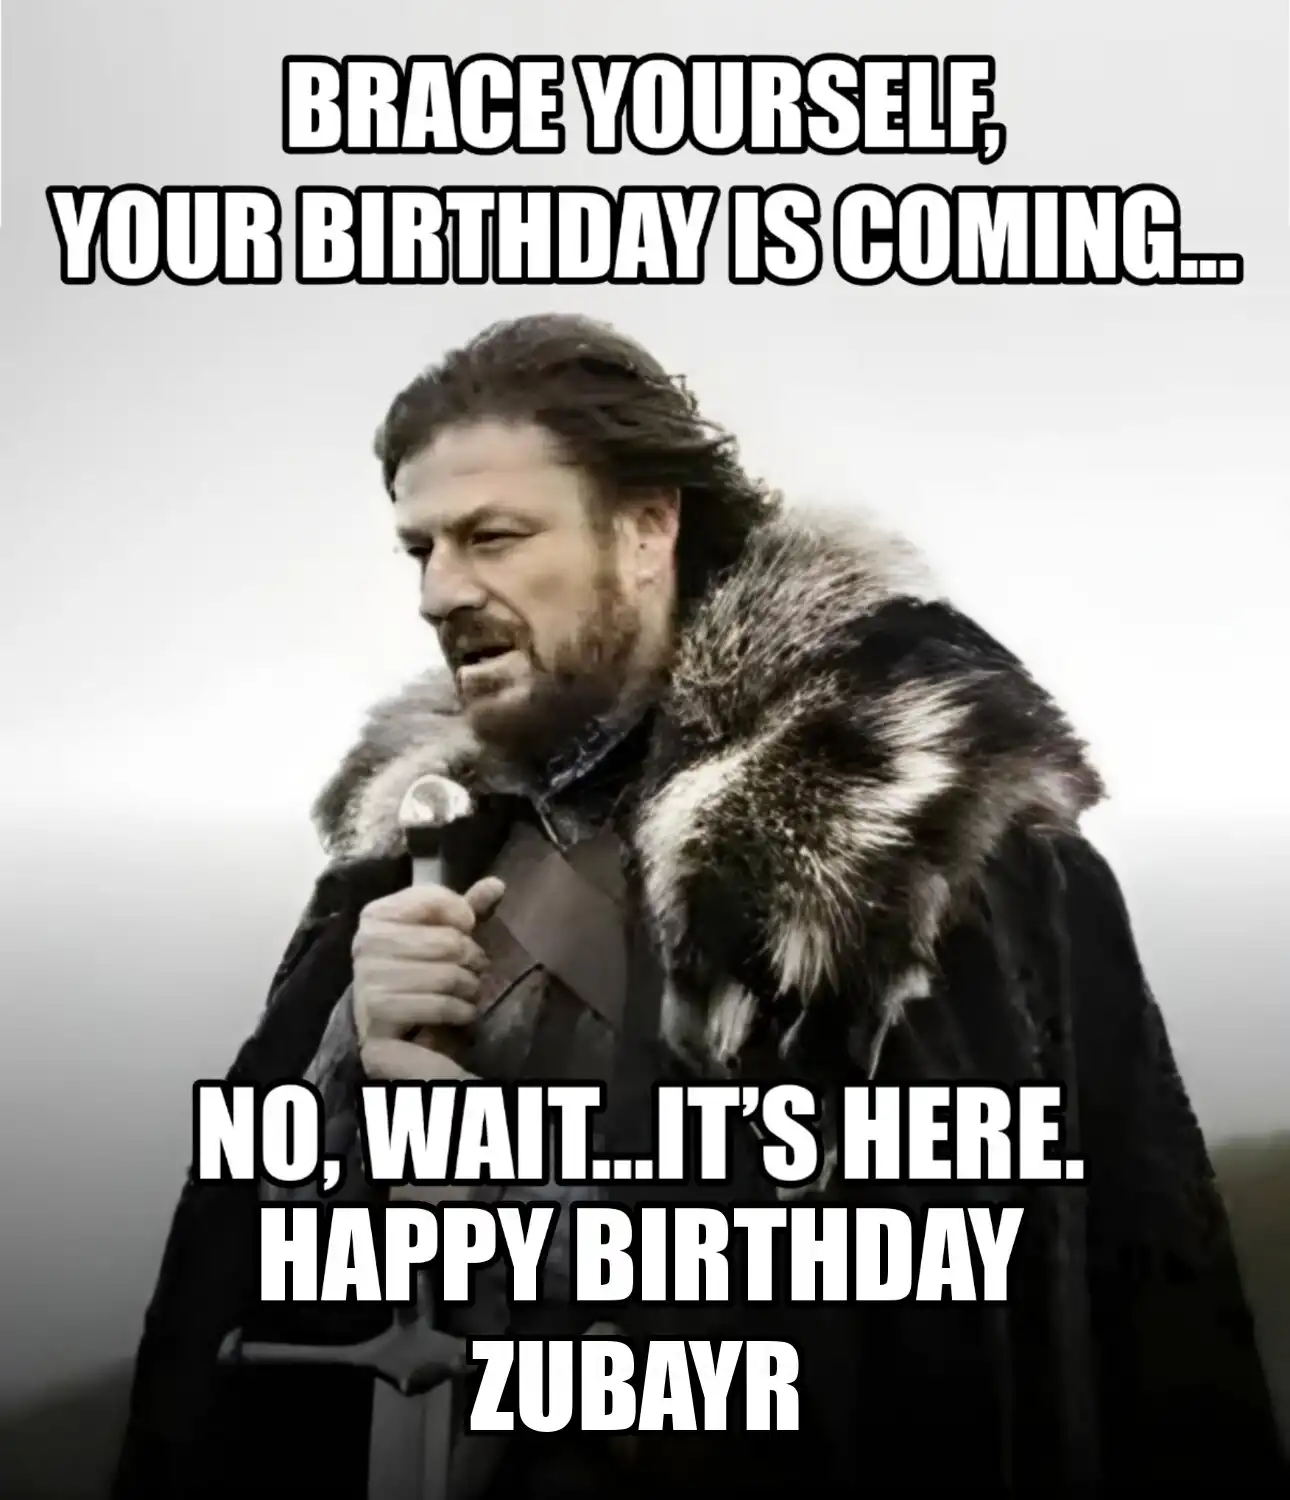 Happy Birthday Zubayr Brace Yourself Your Birthday Is Coming Meme